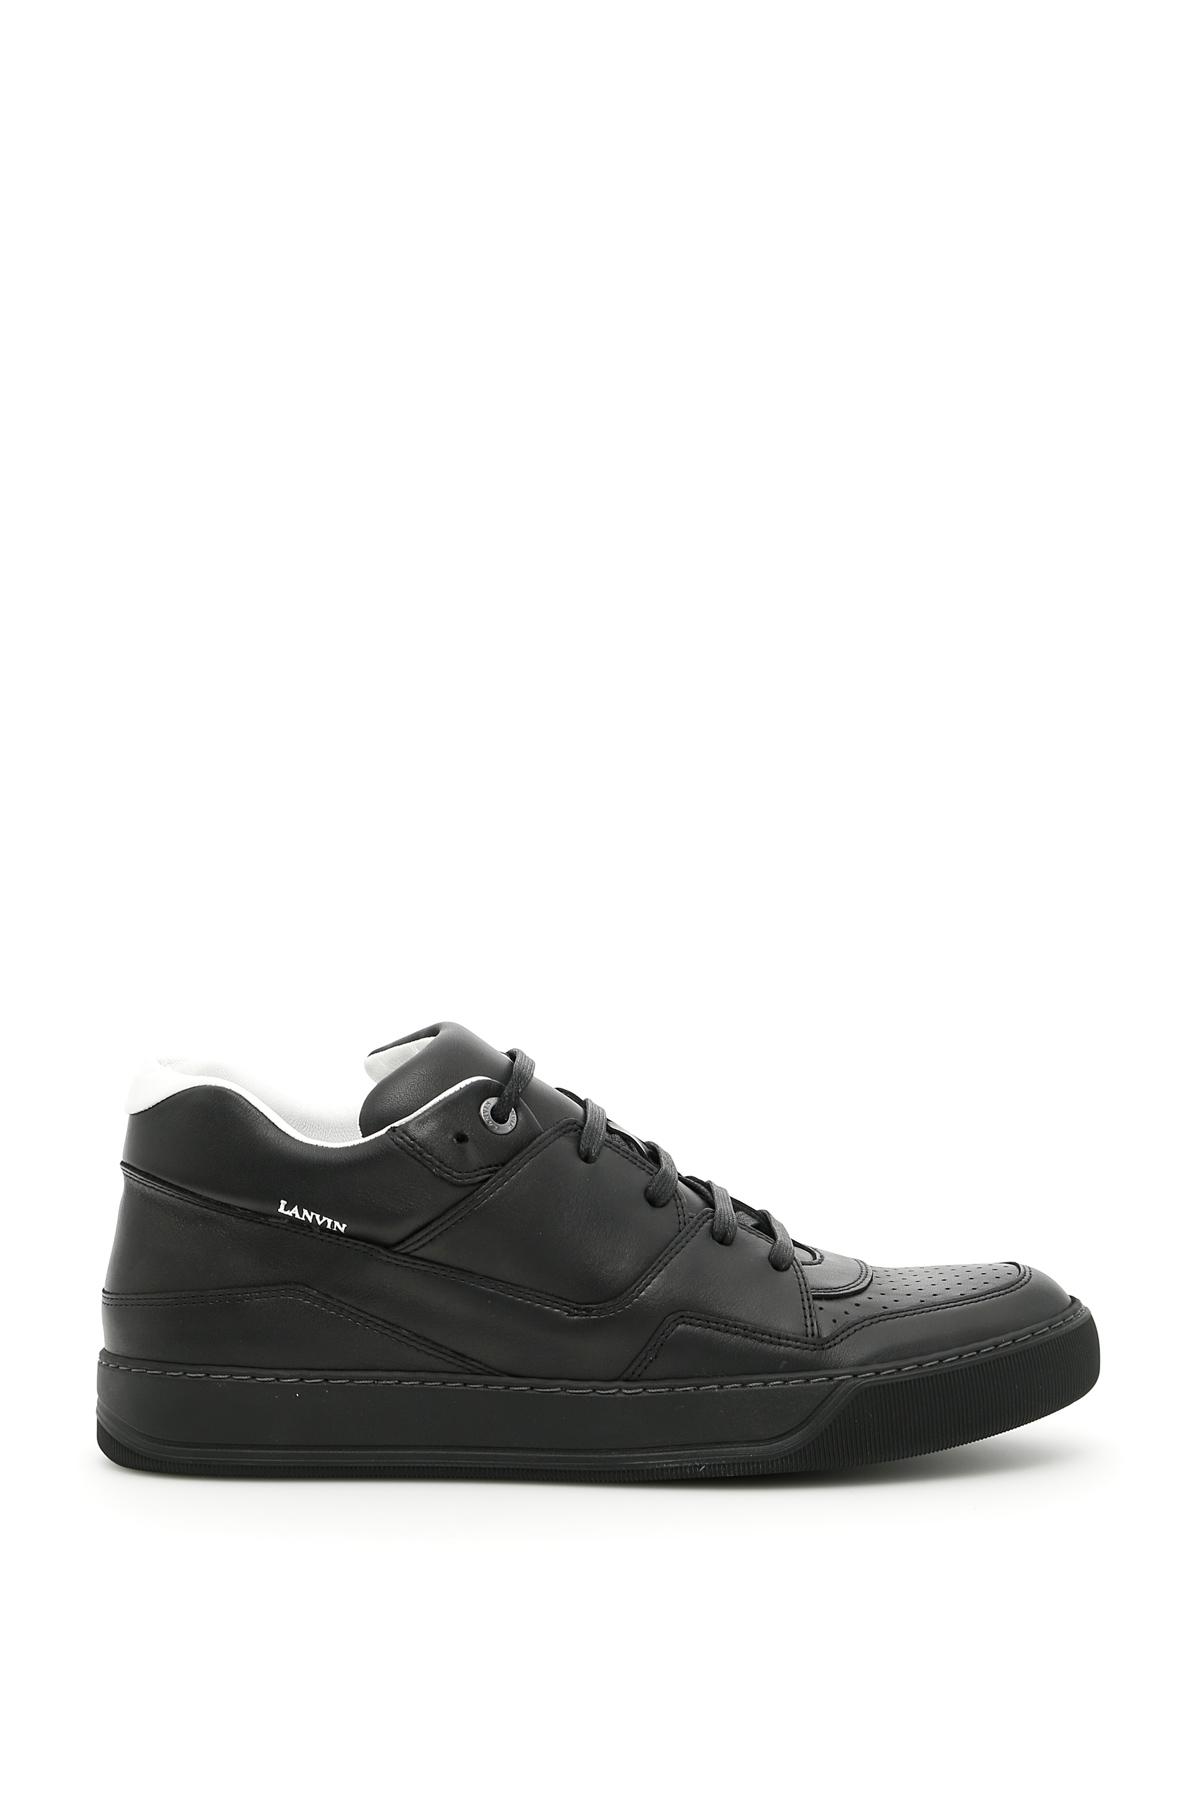 Lanvin Calfskin Sneakers in Black for Men - Lyst